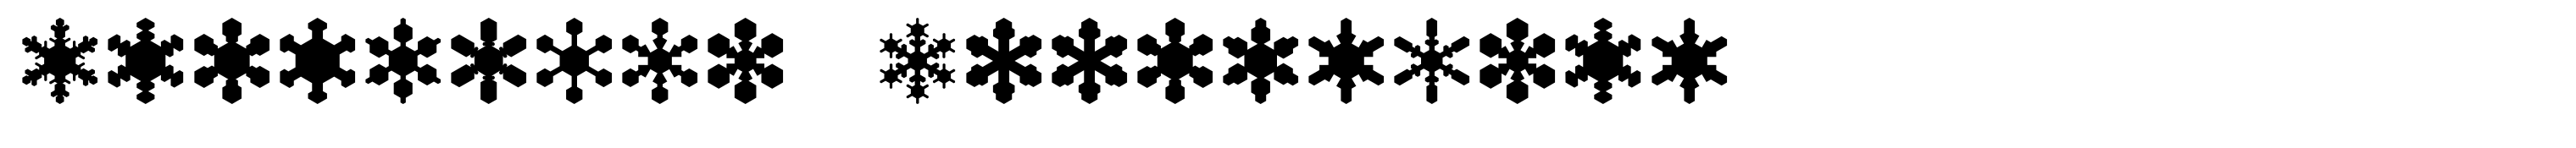 Snowflake Assortment